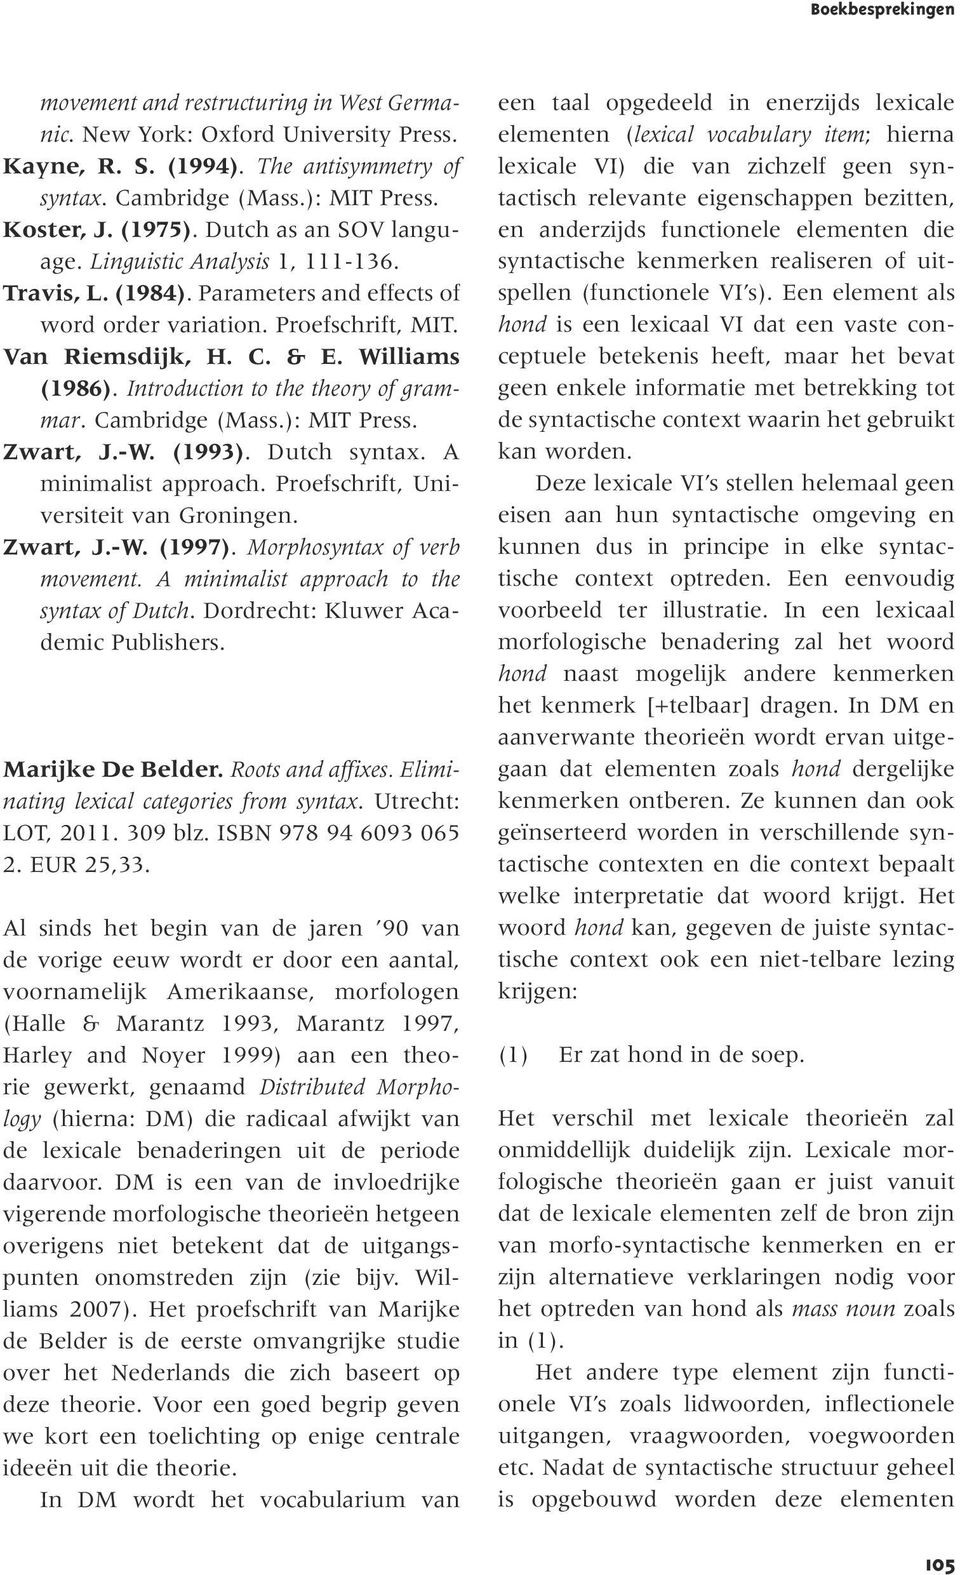 Introduction to the theory of grammar. Cambridge (Mass.): MIT Press. Zwart, J.-W. (1993). Dutch syntax. A minimalist approach. Proefschrift, Universiteit van Groningen. Zwart, J.-W. (1997).